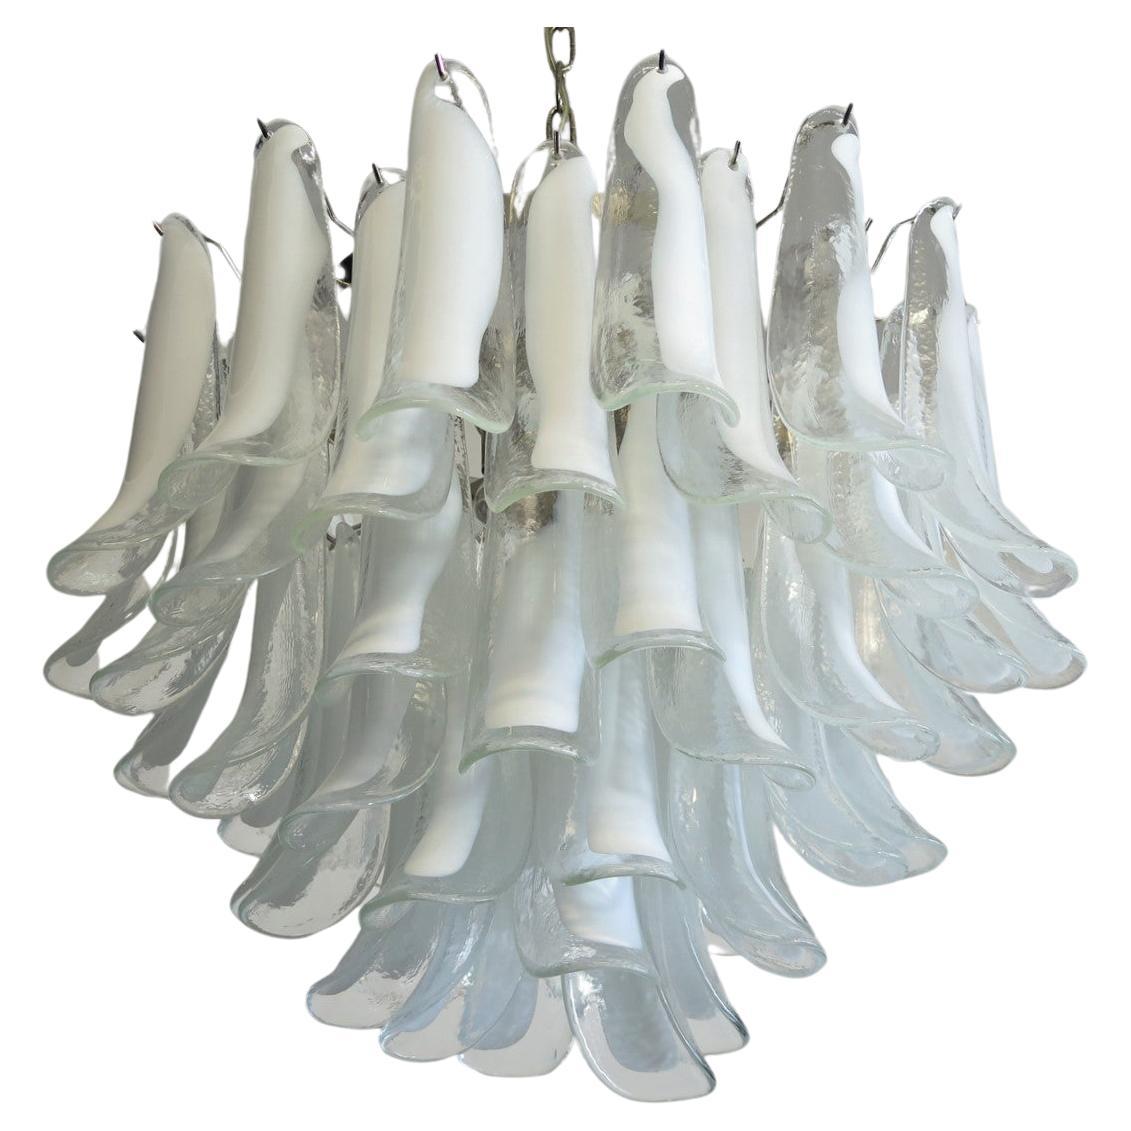 Italian vintage Murano chandelier - Mazzega - 53 tasparent lattimo glass petals